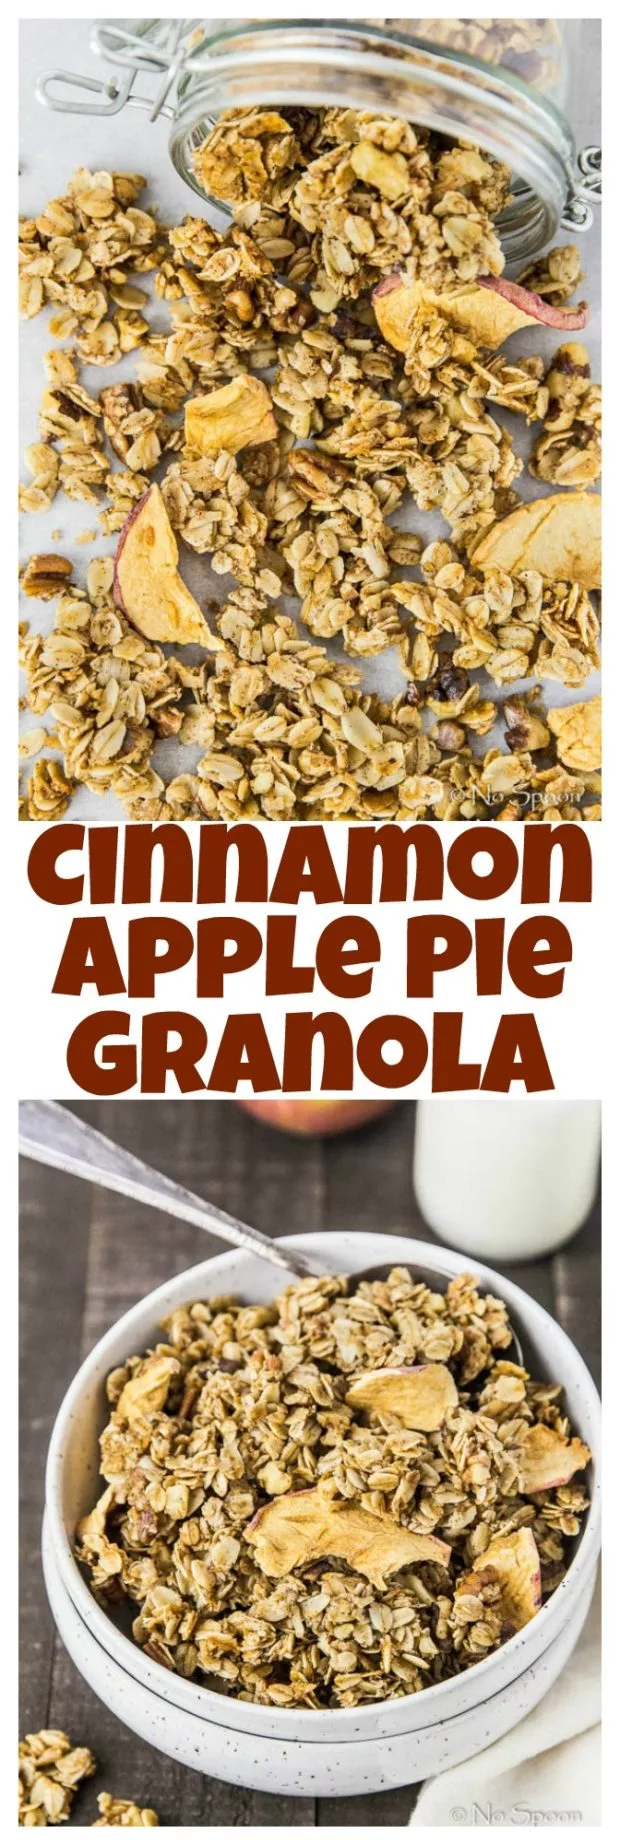 cinnamon-apple-pie-granola-long-pin1